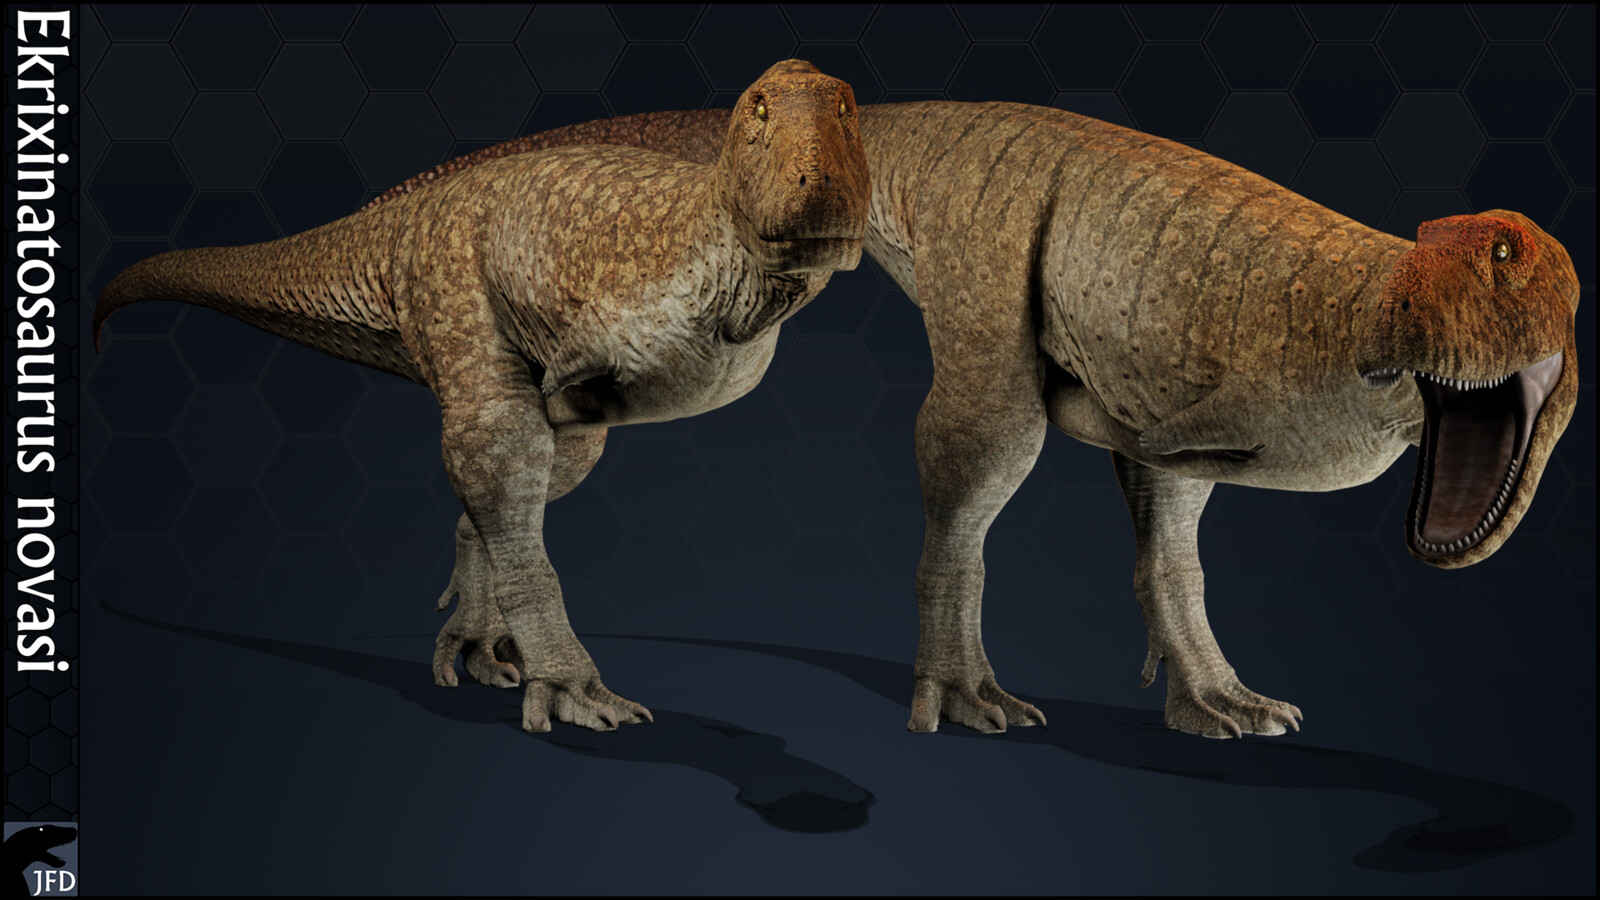 Ekrixinatosaurus novasi male (right) and female (left) primary skins.